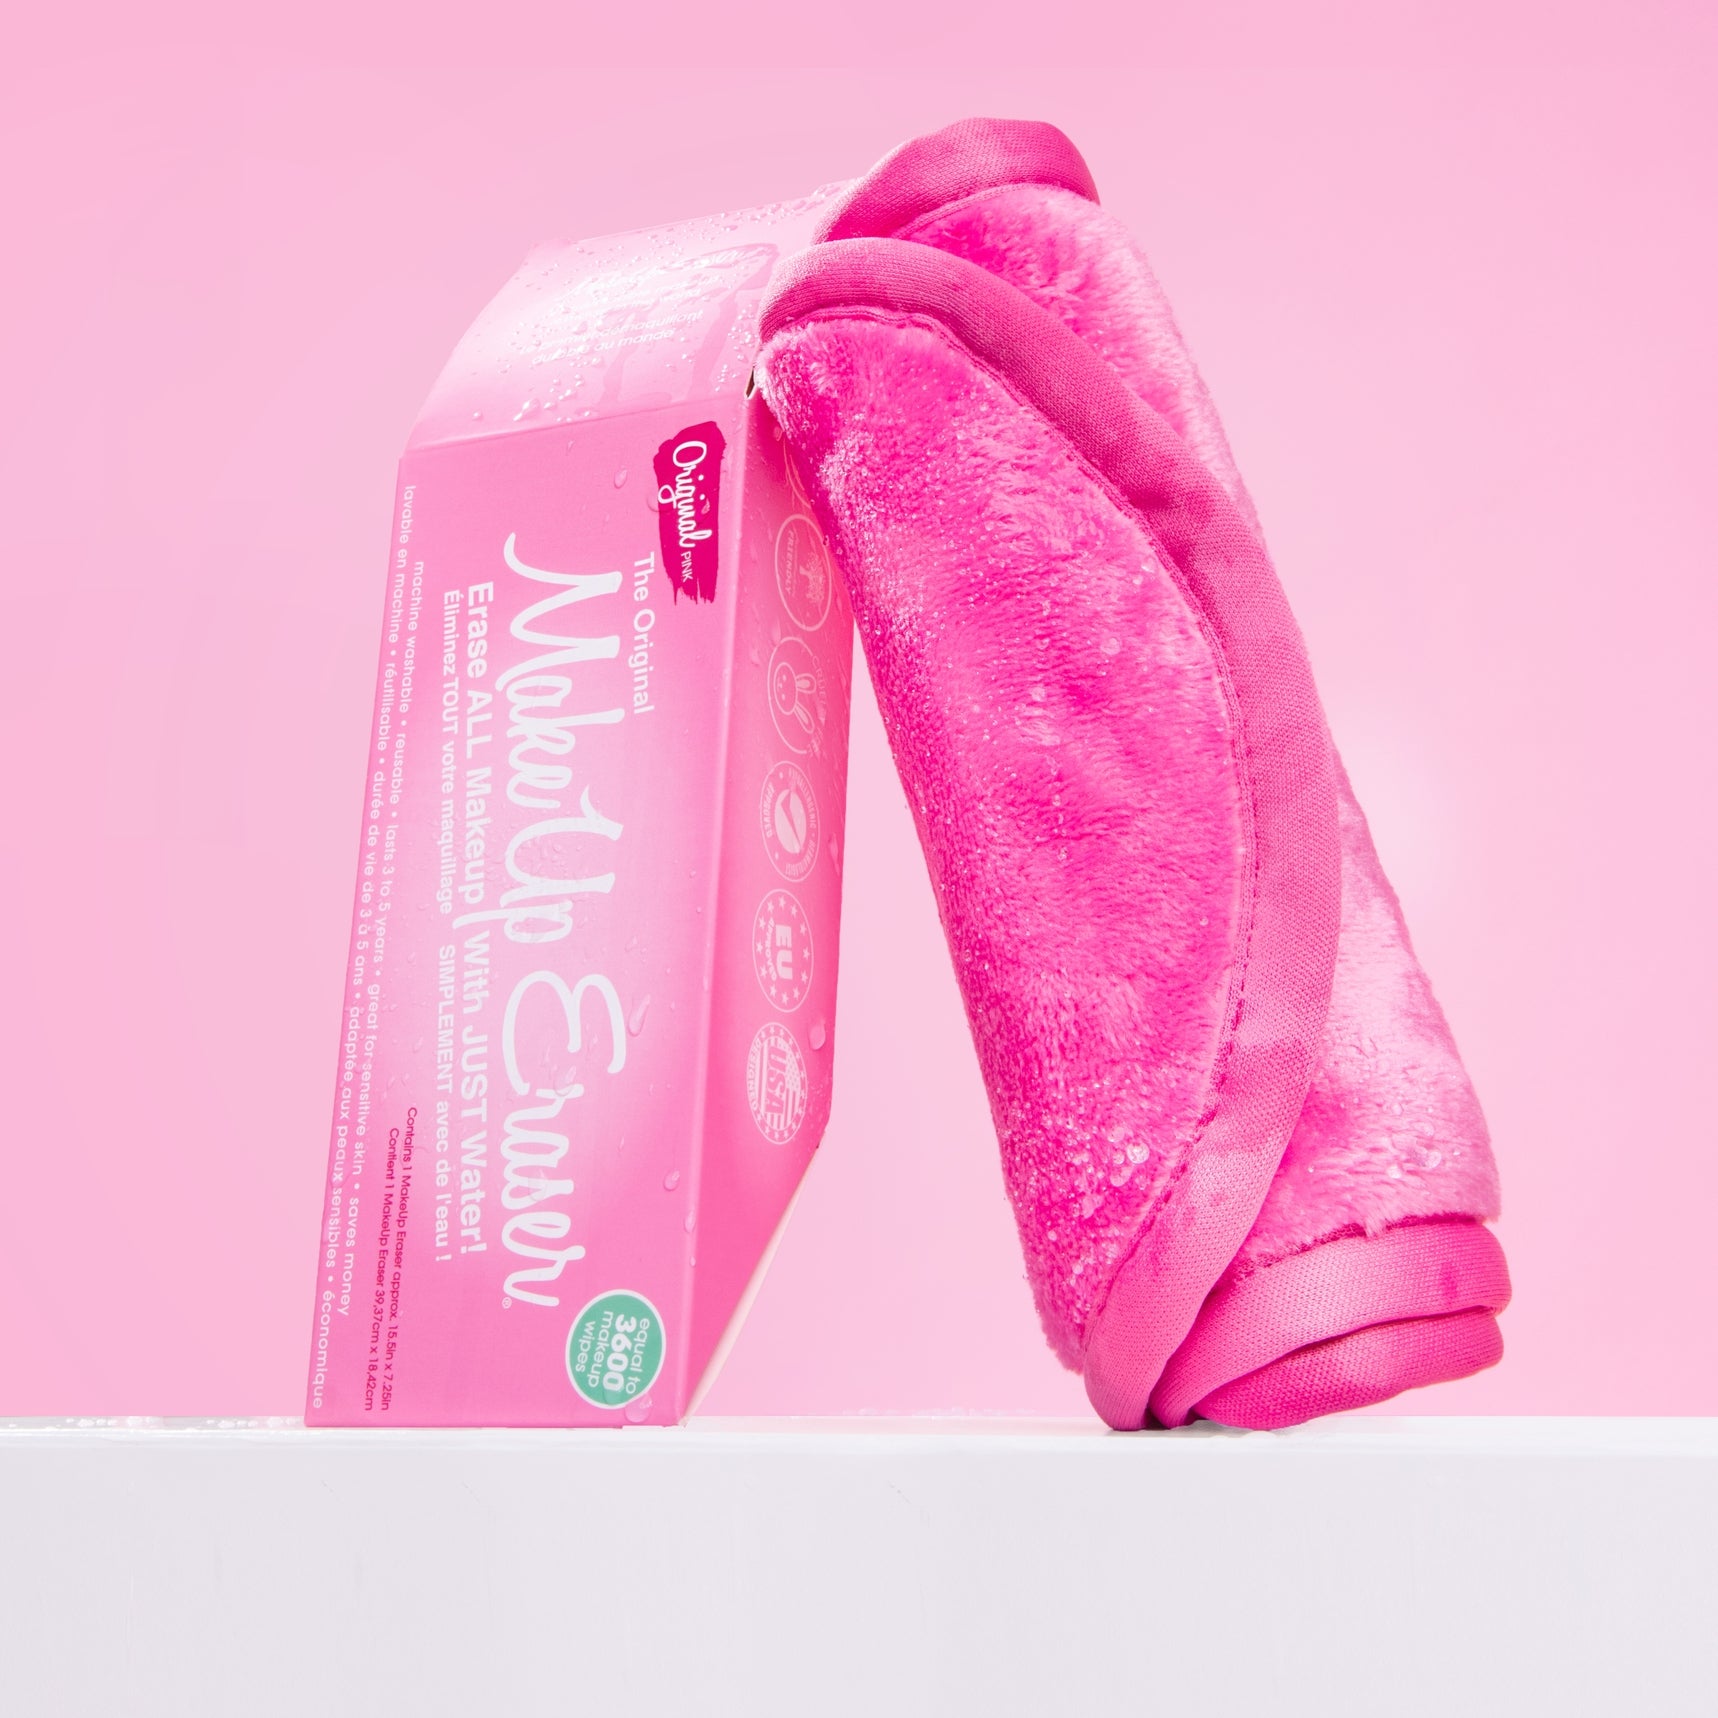 The Original Makeup Eraser in Pink